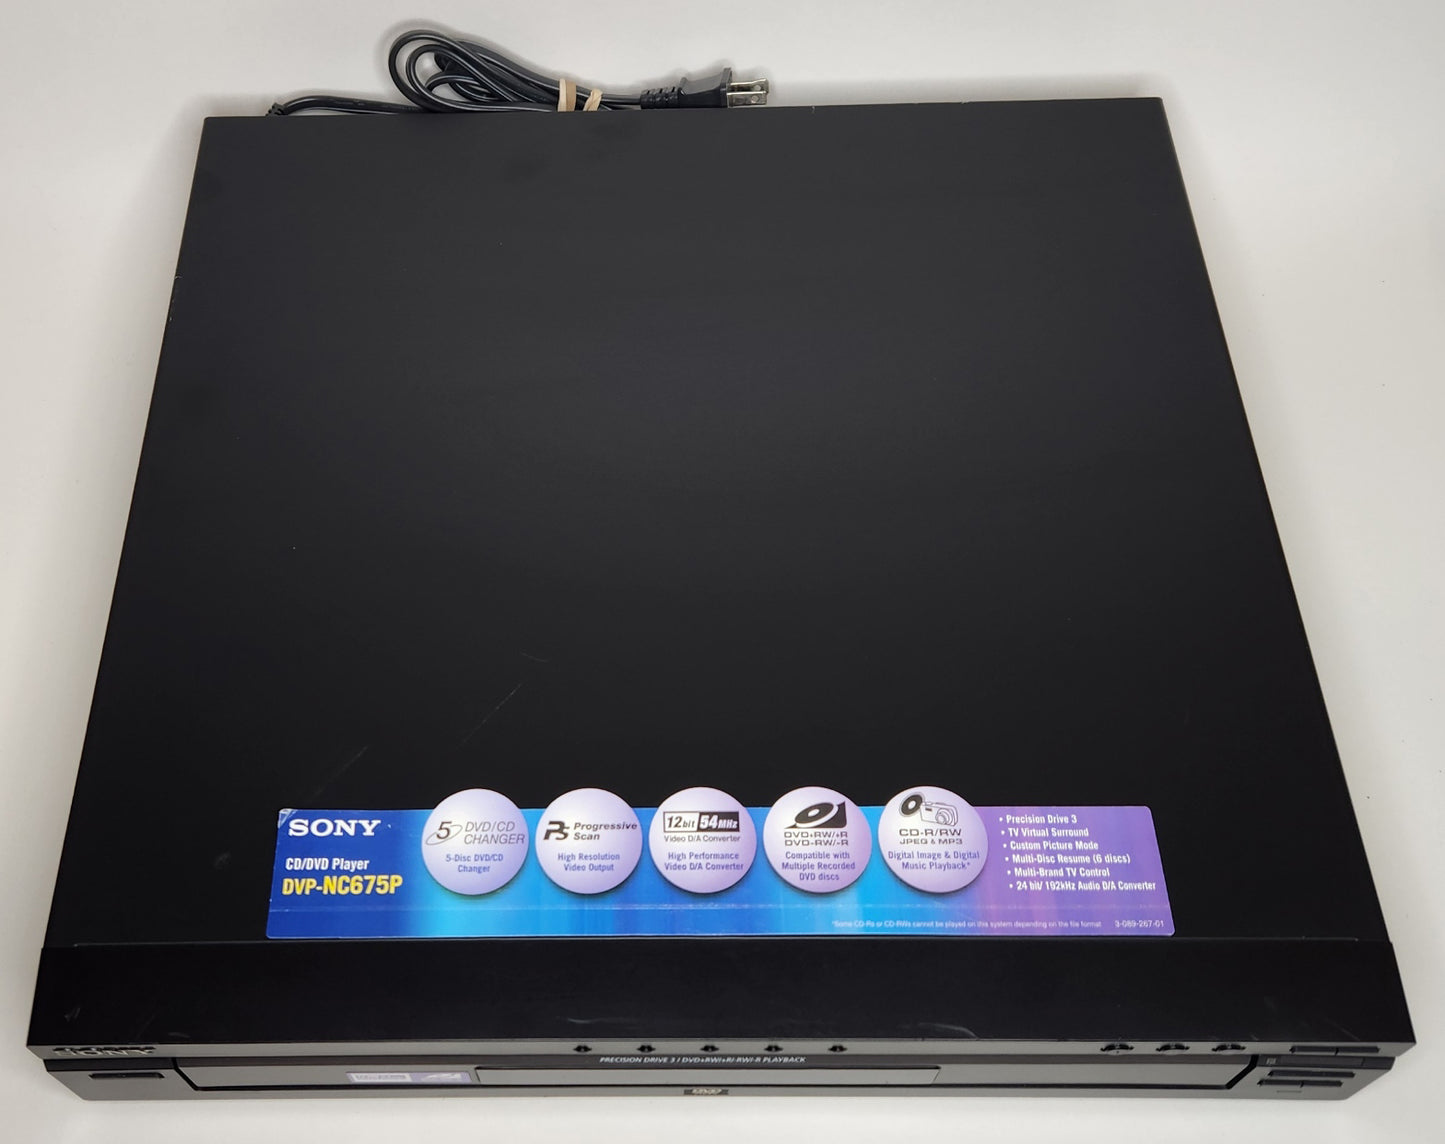 Sony DVP-NC675P DVD/CD Player, 5 Disc Carousel Changer, Black - Top